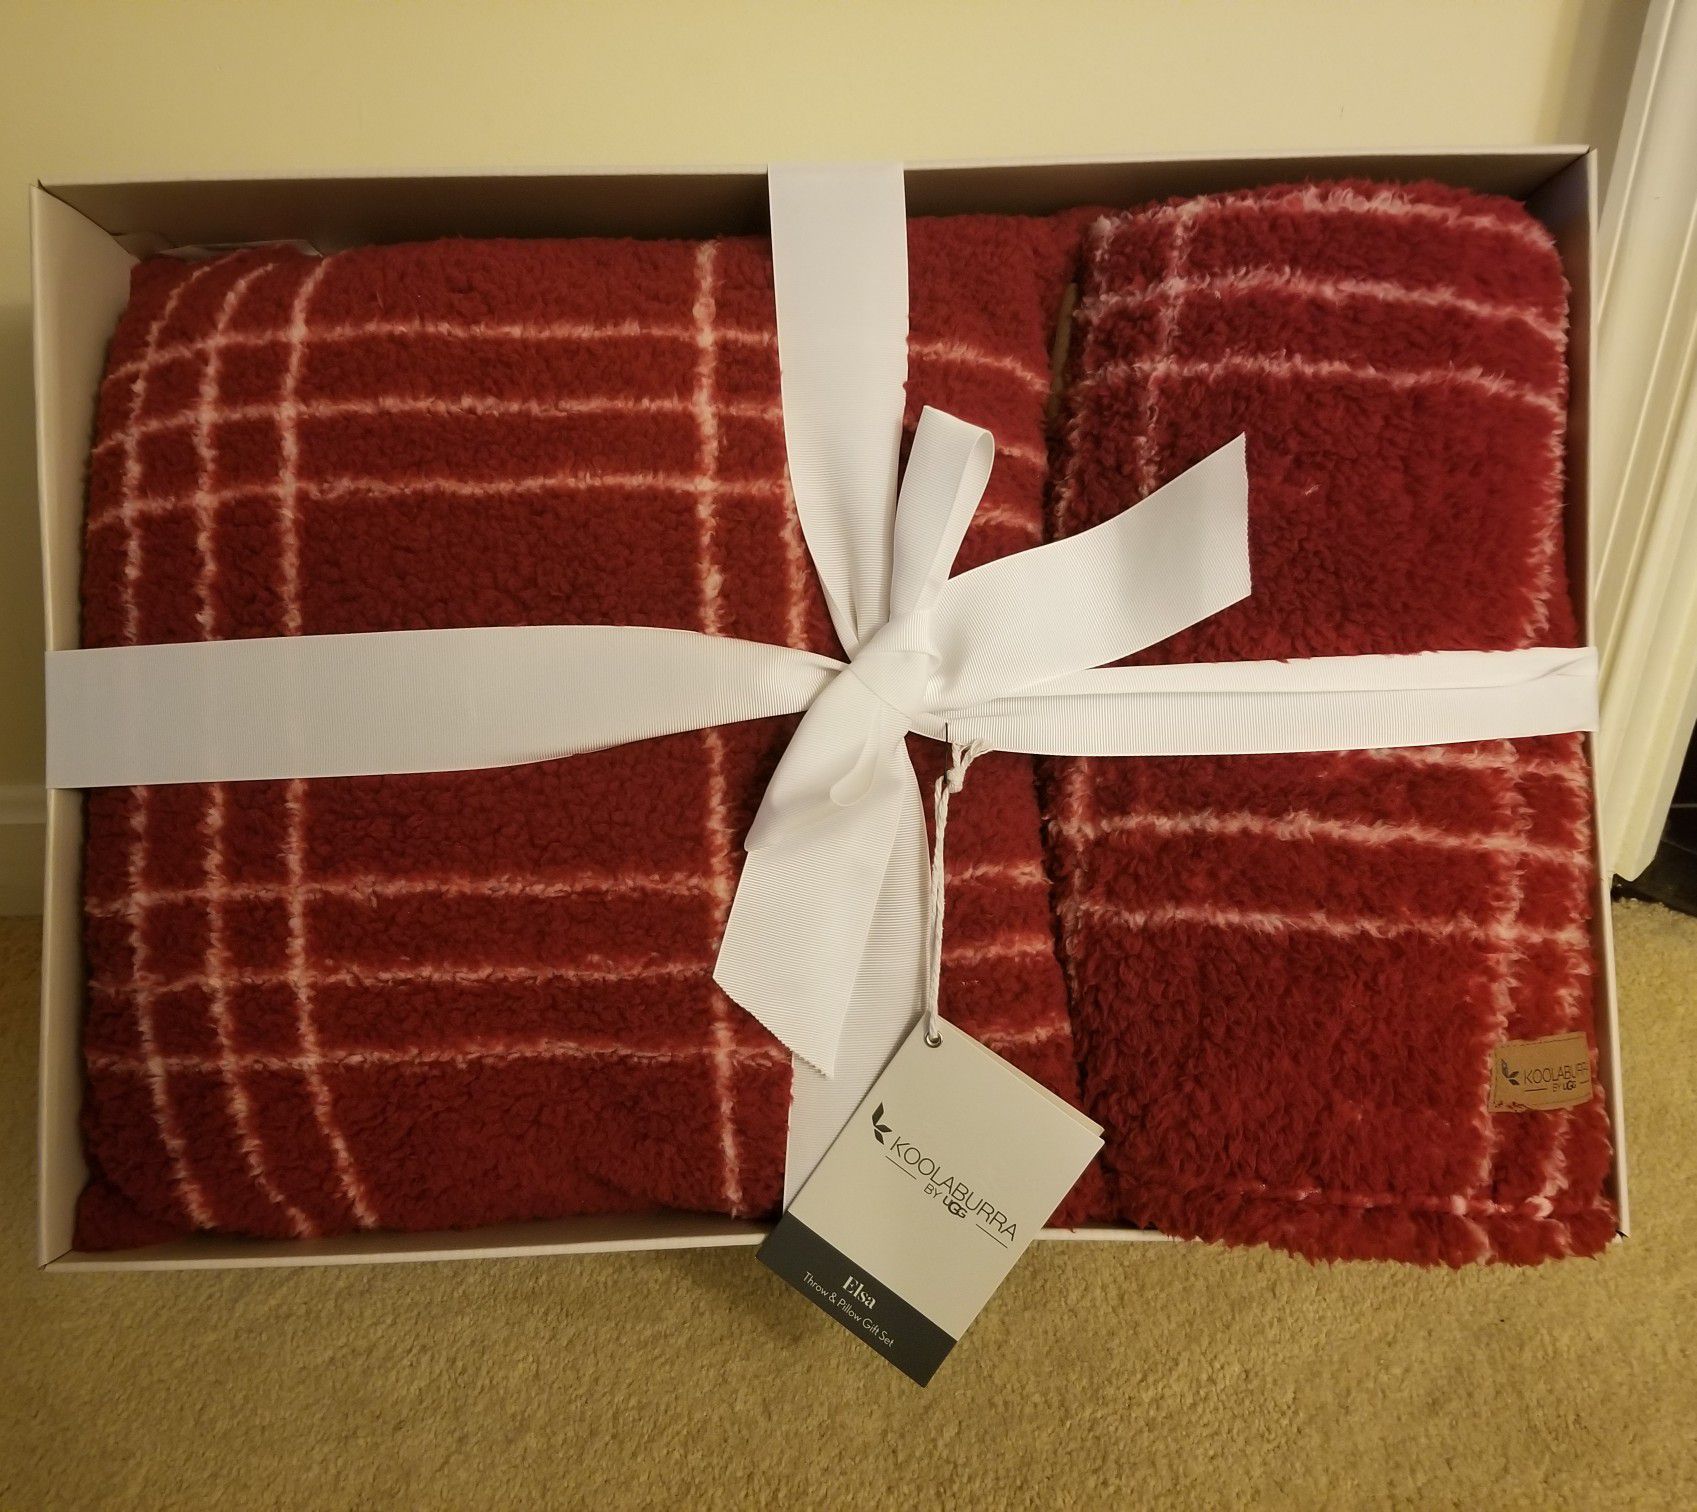 UGG Koolaburra Red Plush Throw & Pillow Gift SetBrand new in gift box. Elsa blanket and pillow gift set in a plush fleece.